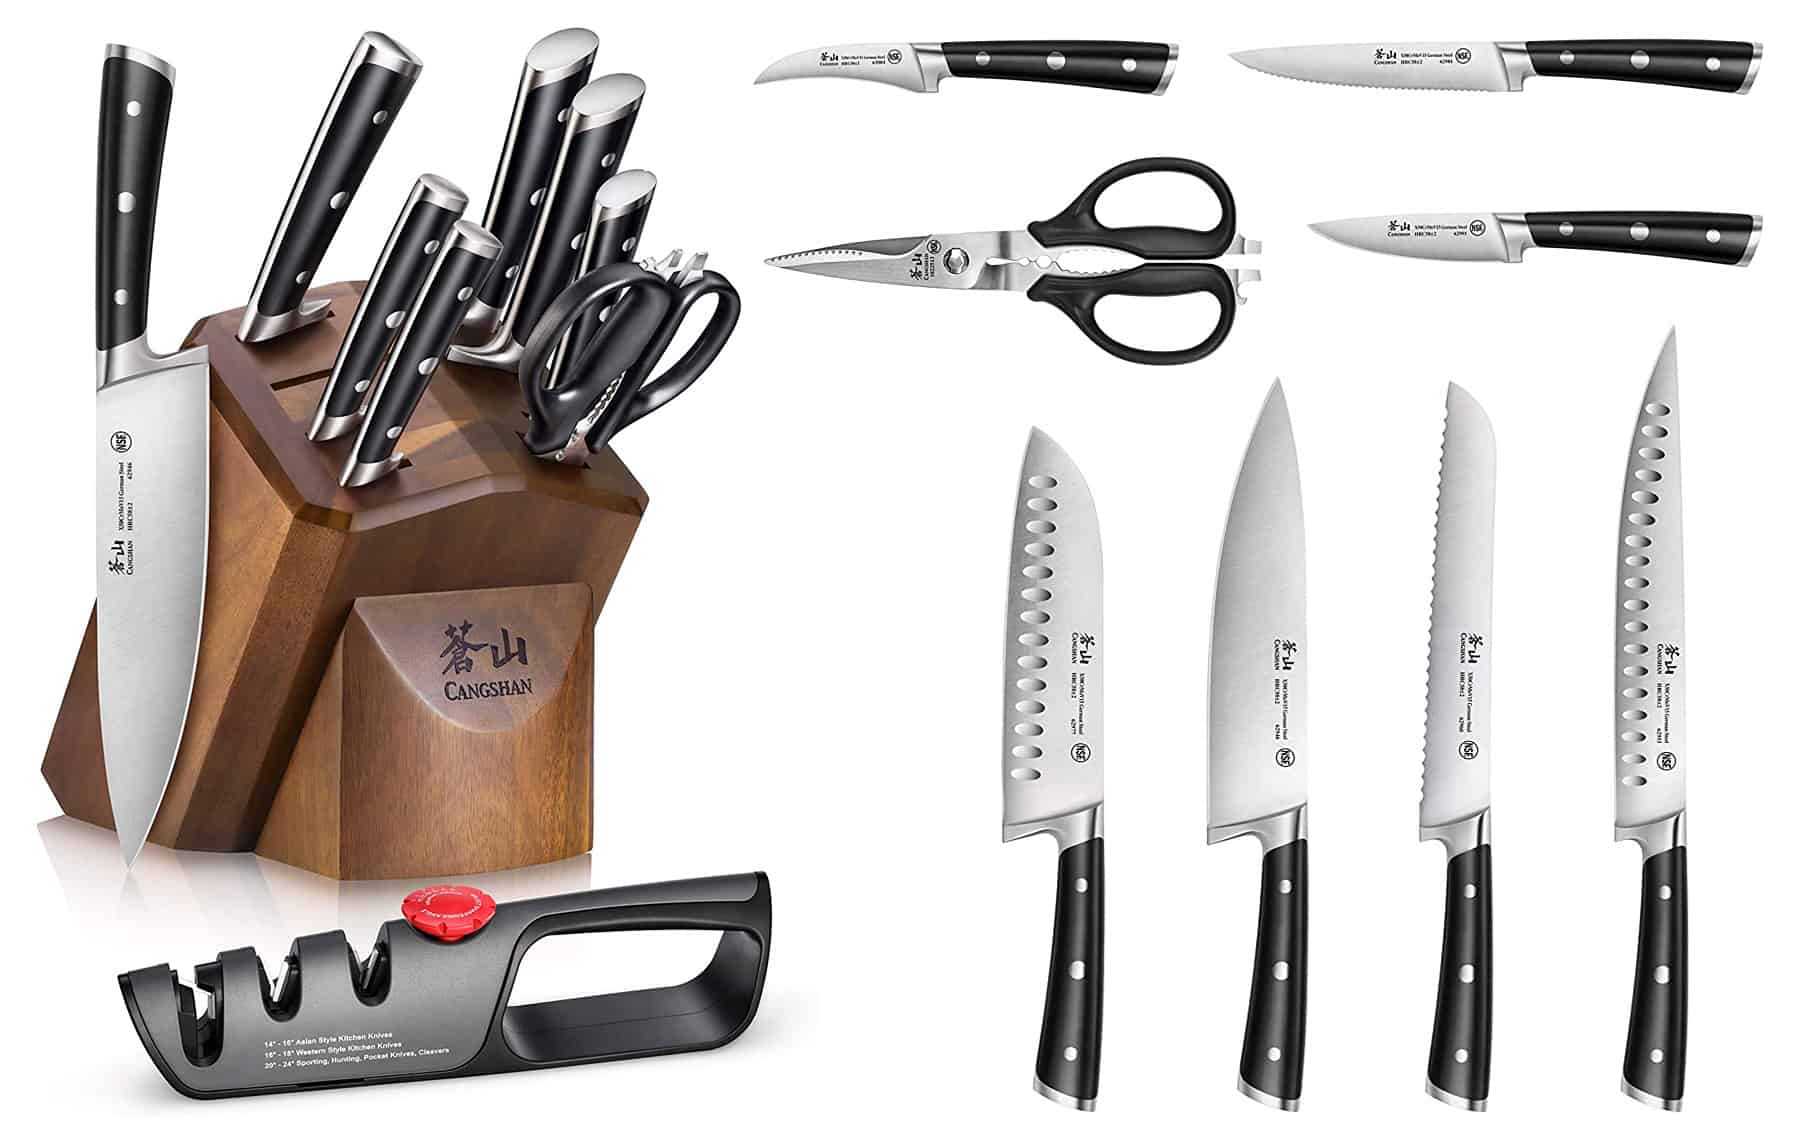  Home Hero 20 Pcs Kitchen Knife Set, Chef Knife Set